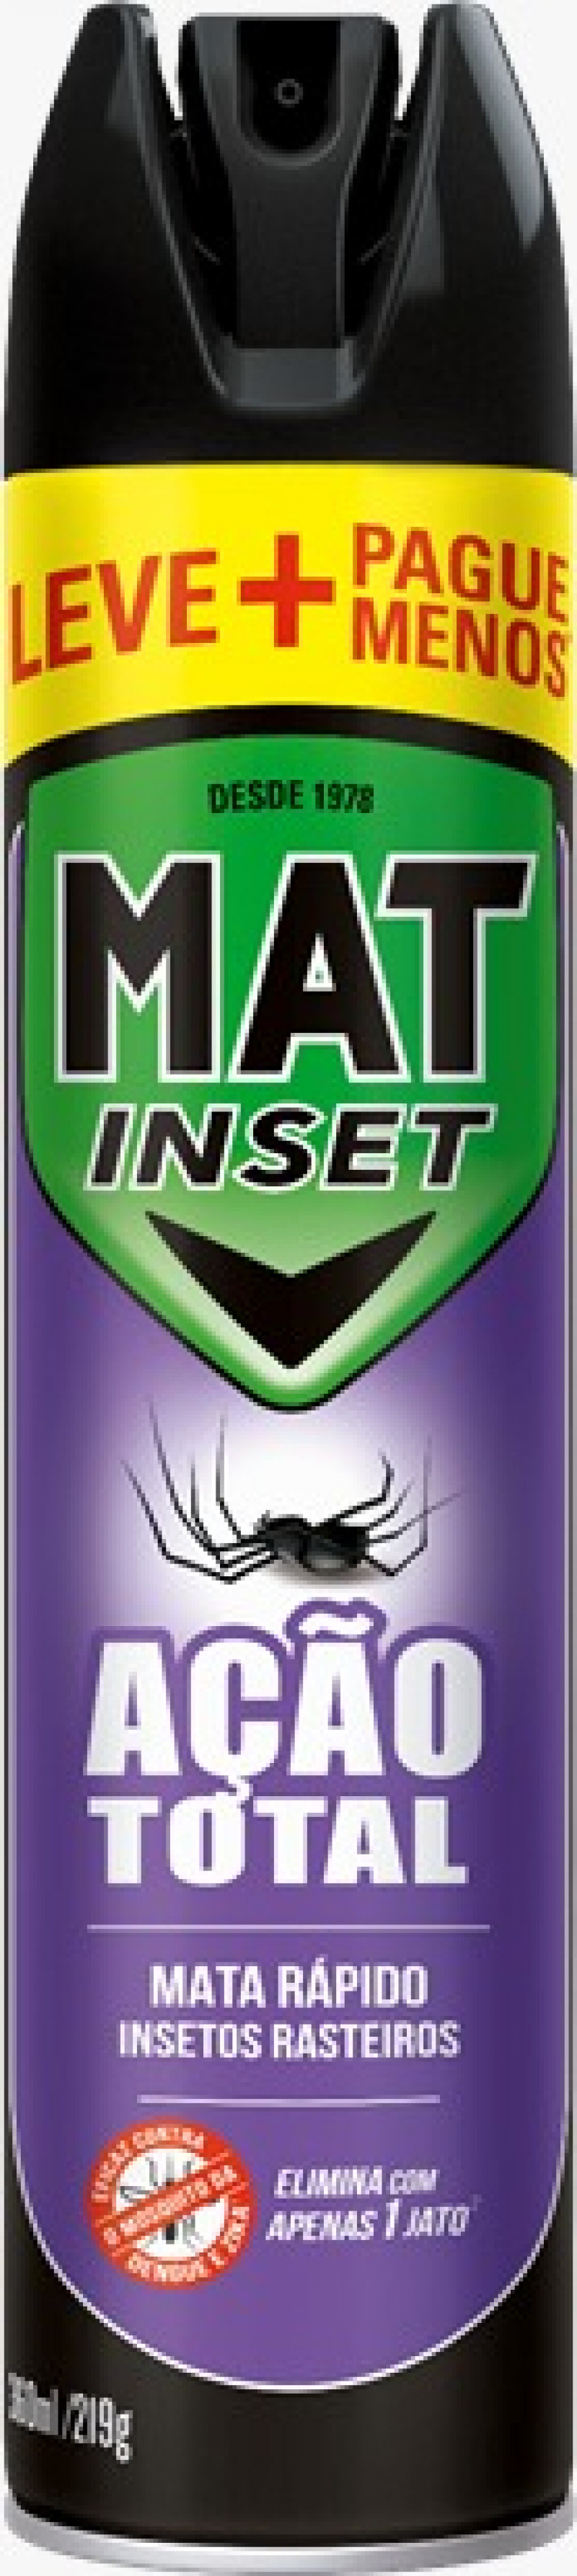 MAT INSET INSETICIDA 360ML PROMO GT33 - ACAO TOTAL UM COM 1 UM